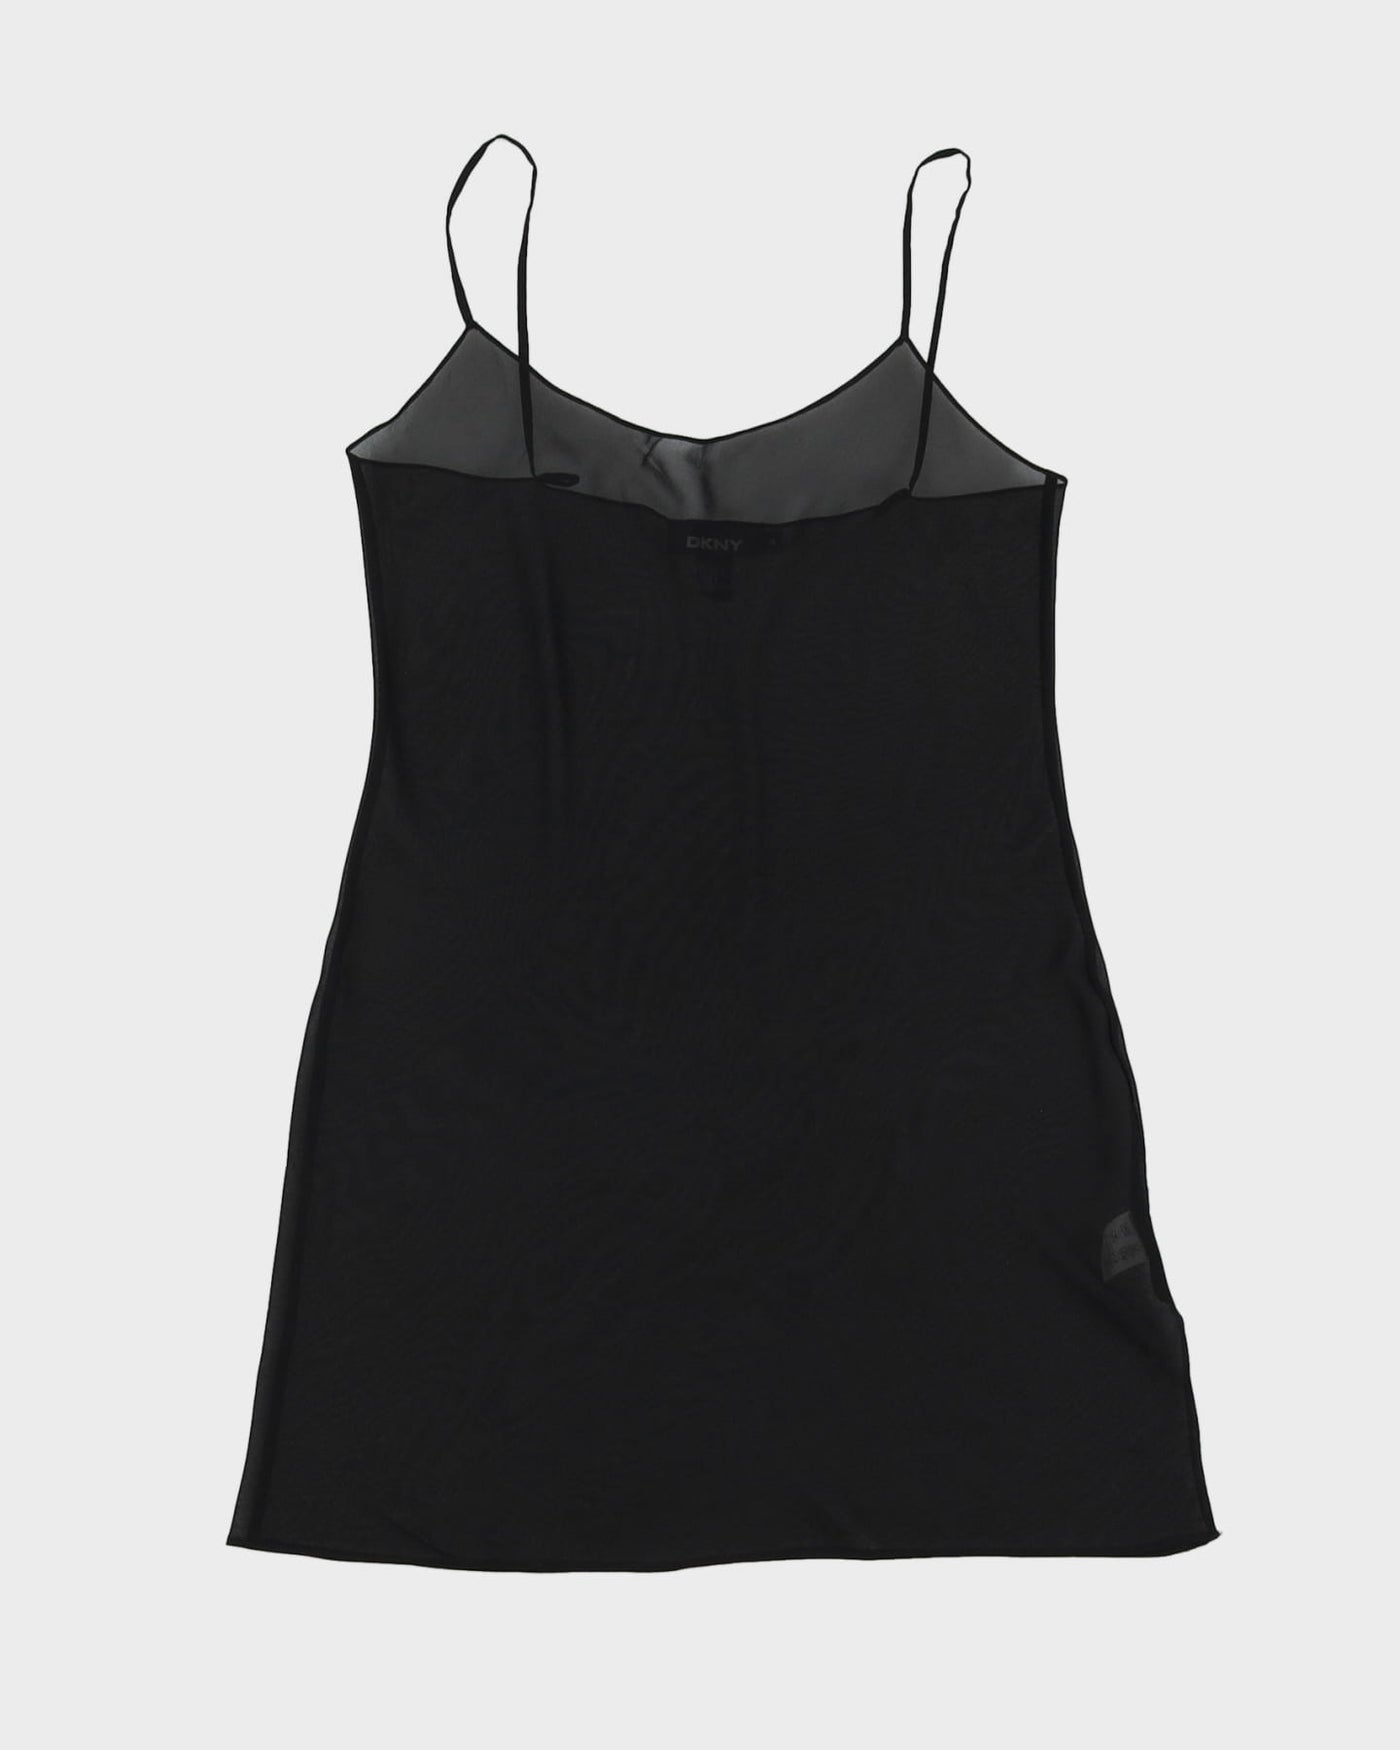 DKNY Sheer Black Slip Dress - S